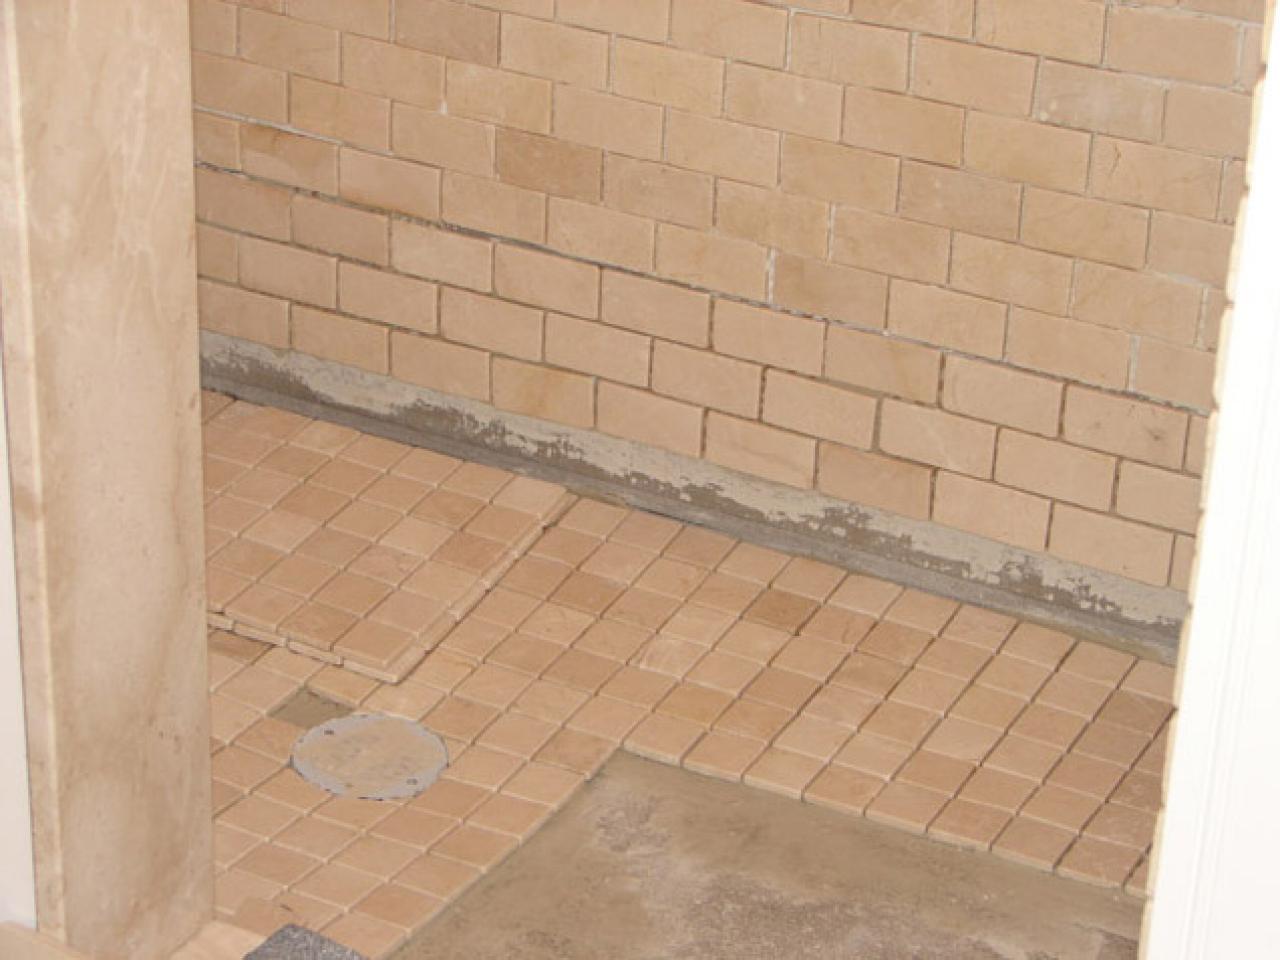 Install Tile In A Bathroom Shower, How To Remove Ceramic Tile Shower Floor